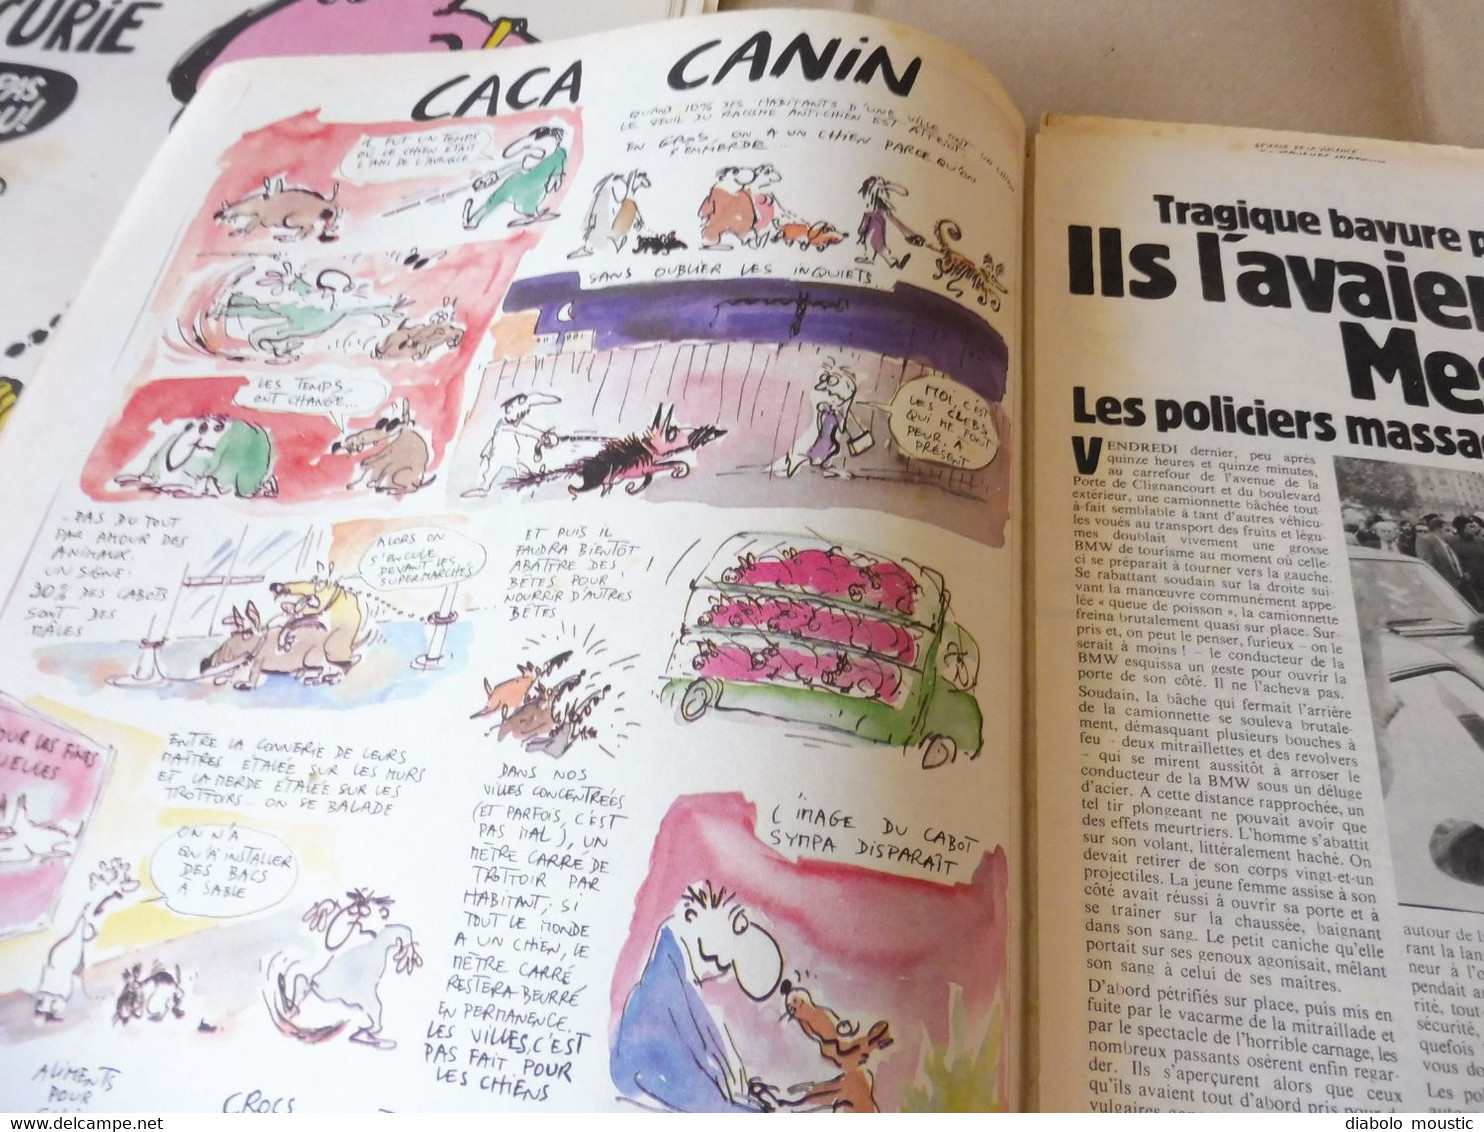 1978   UNE REPUBLIQUE A TÊTE DE MORT  ....Etc  (Charlie Hebdo) - Humor